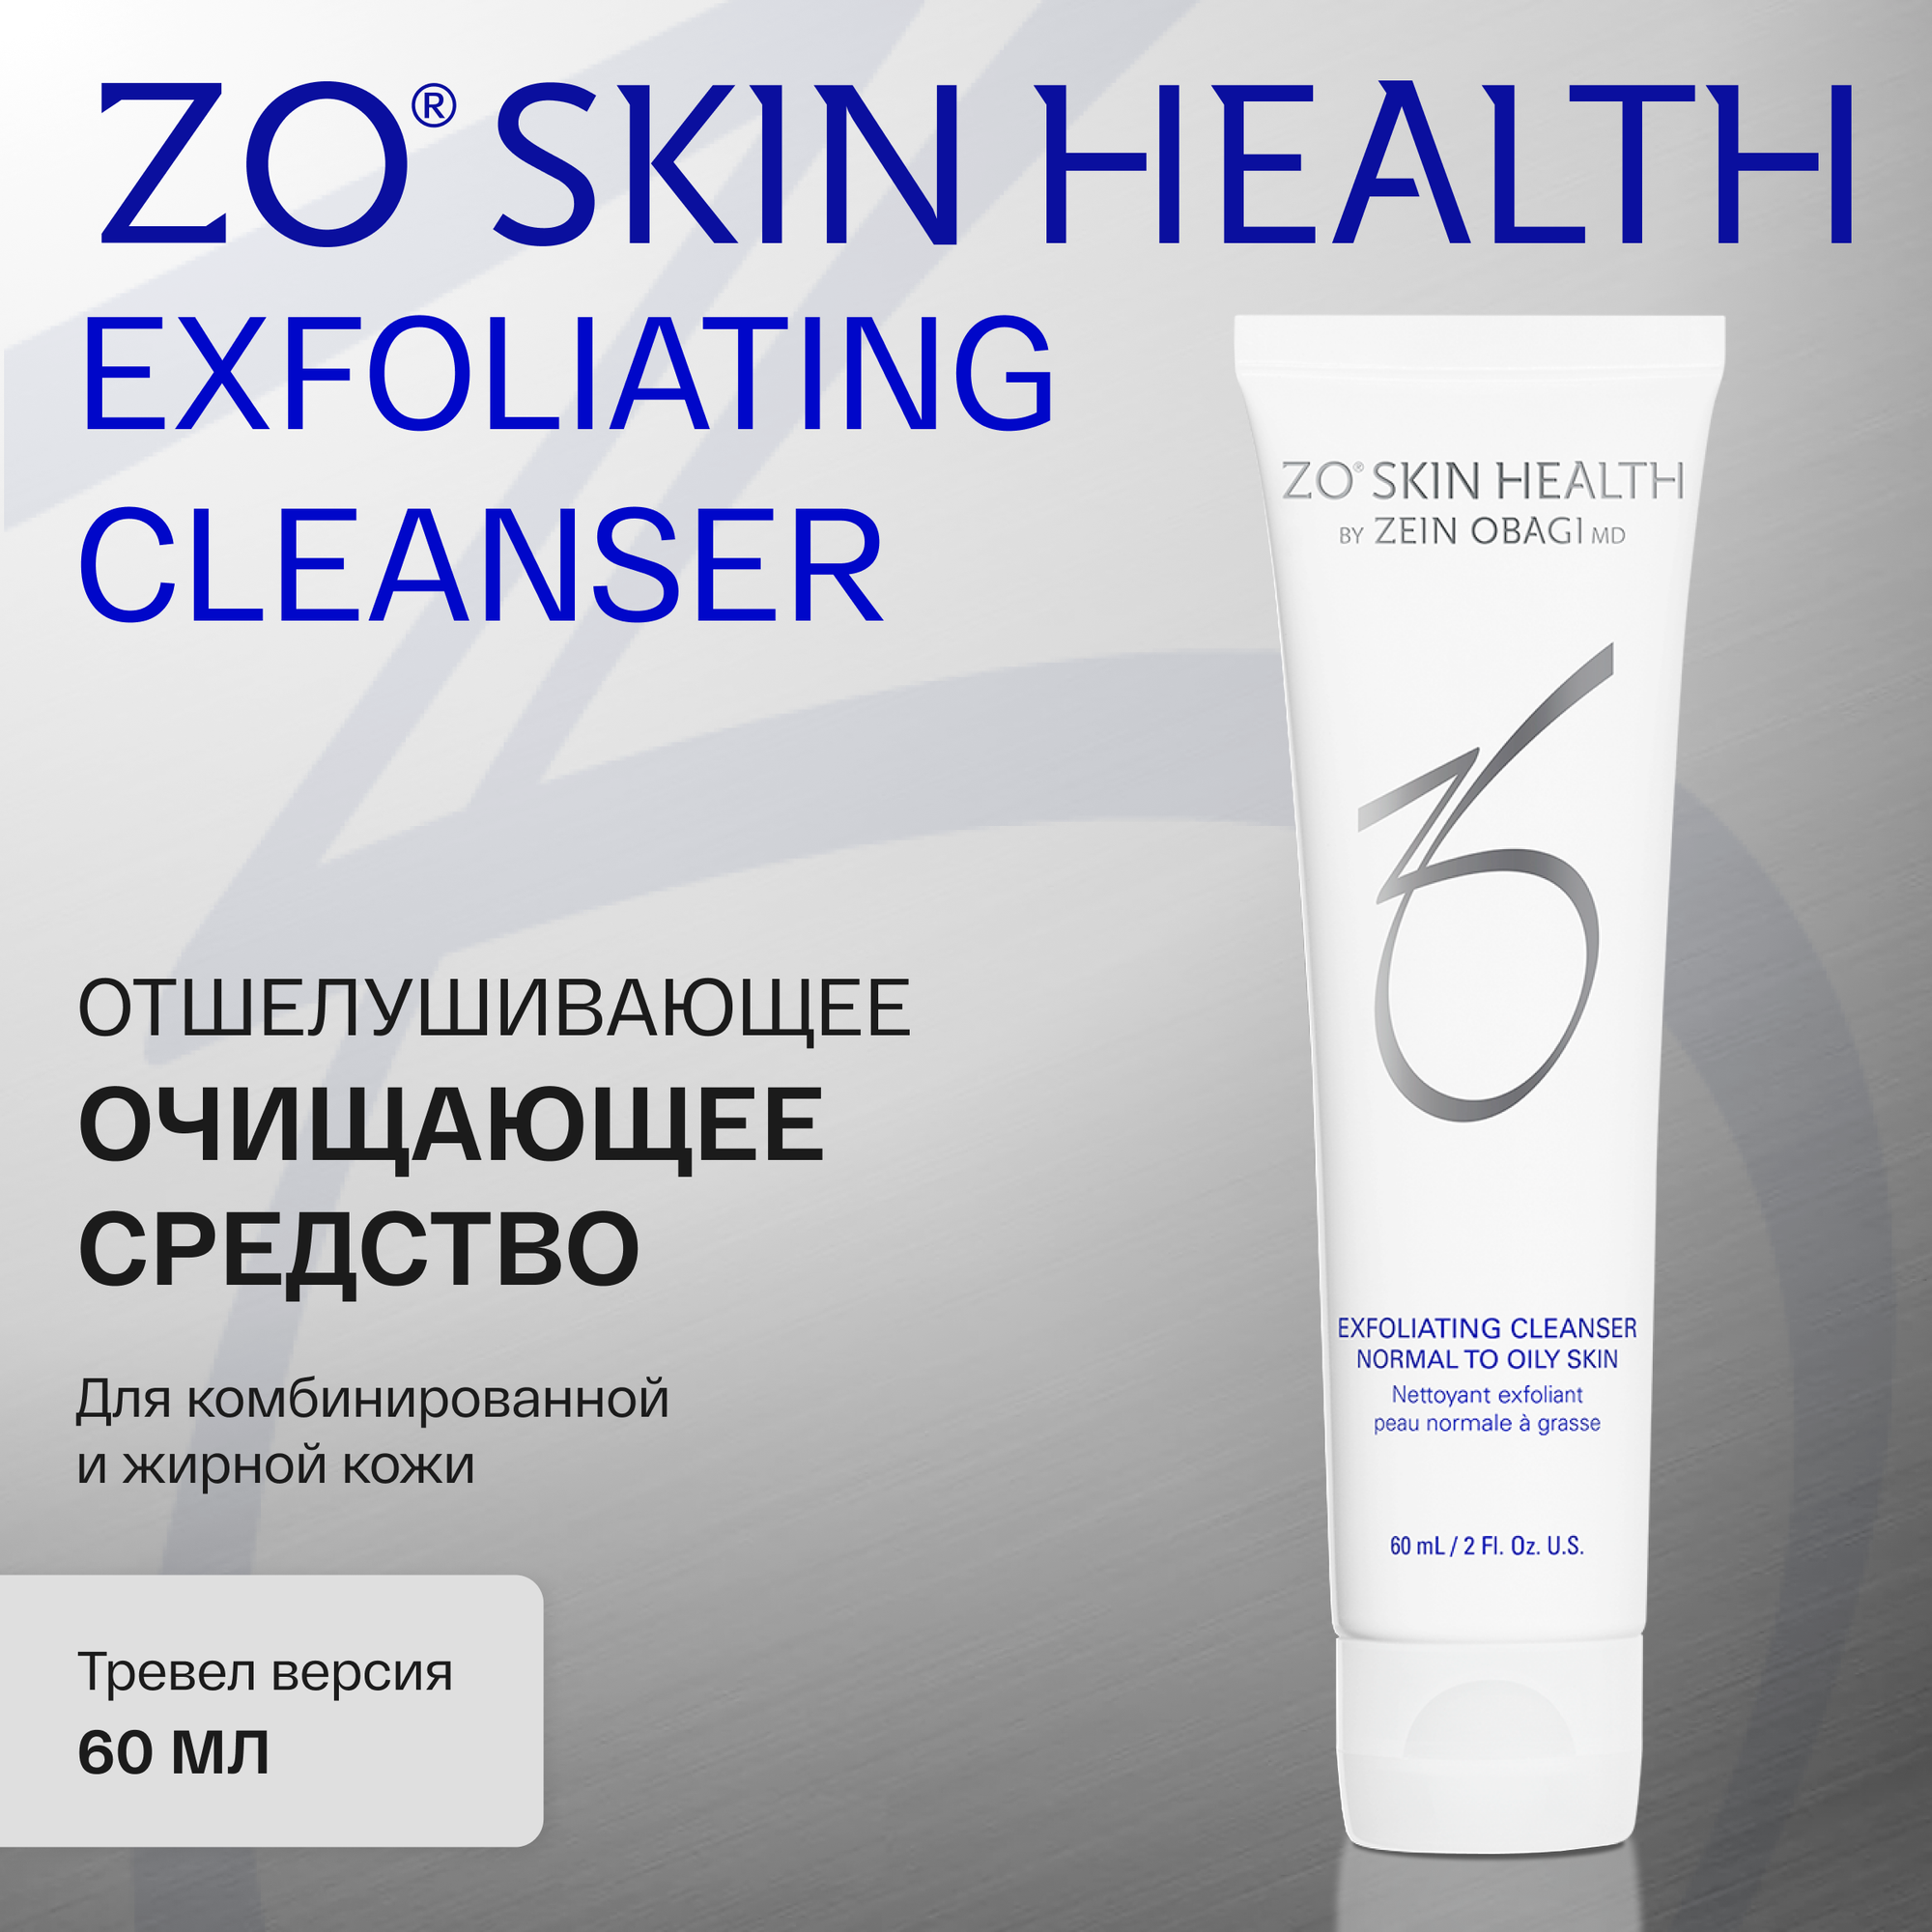 Очищающее средство ZO Skin Health by Zein Obagi Exfoliating Cleanser, с отшелушивающим действием, 60 мл